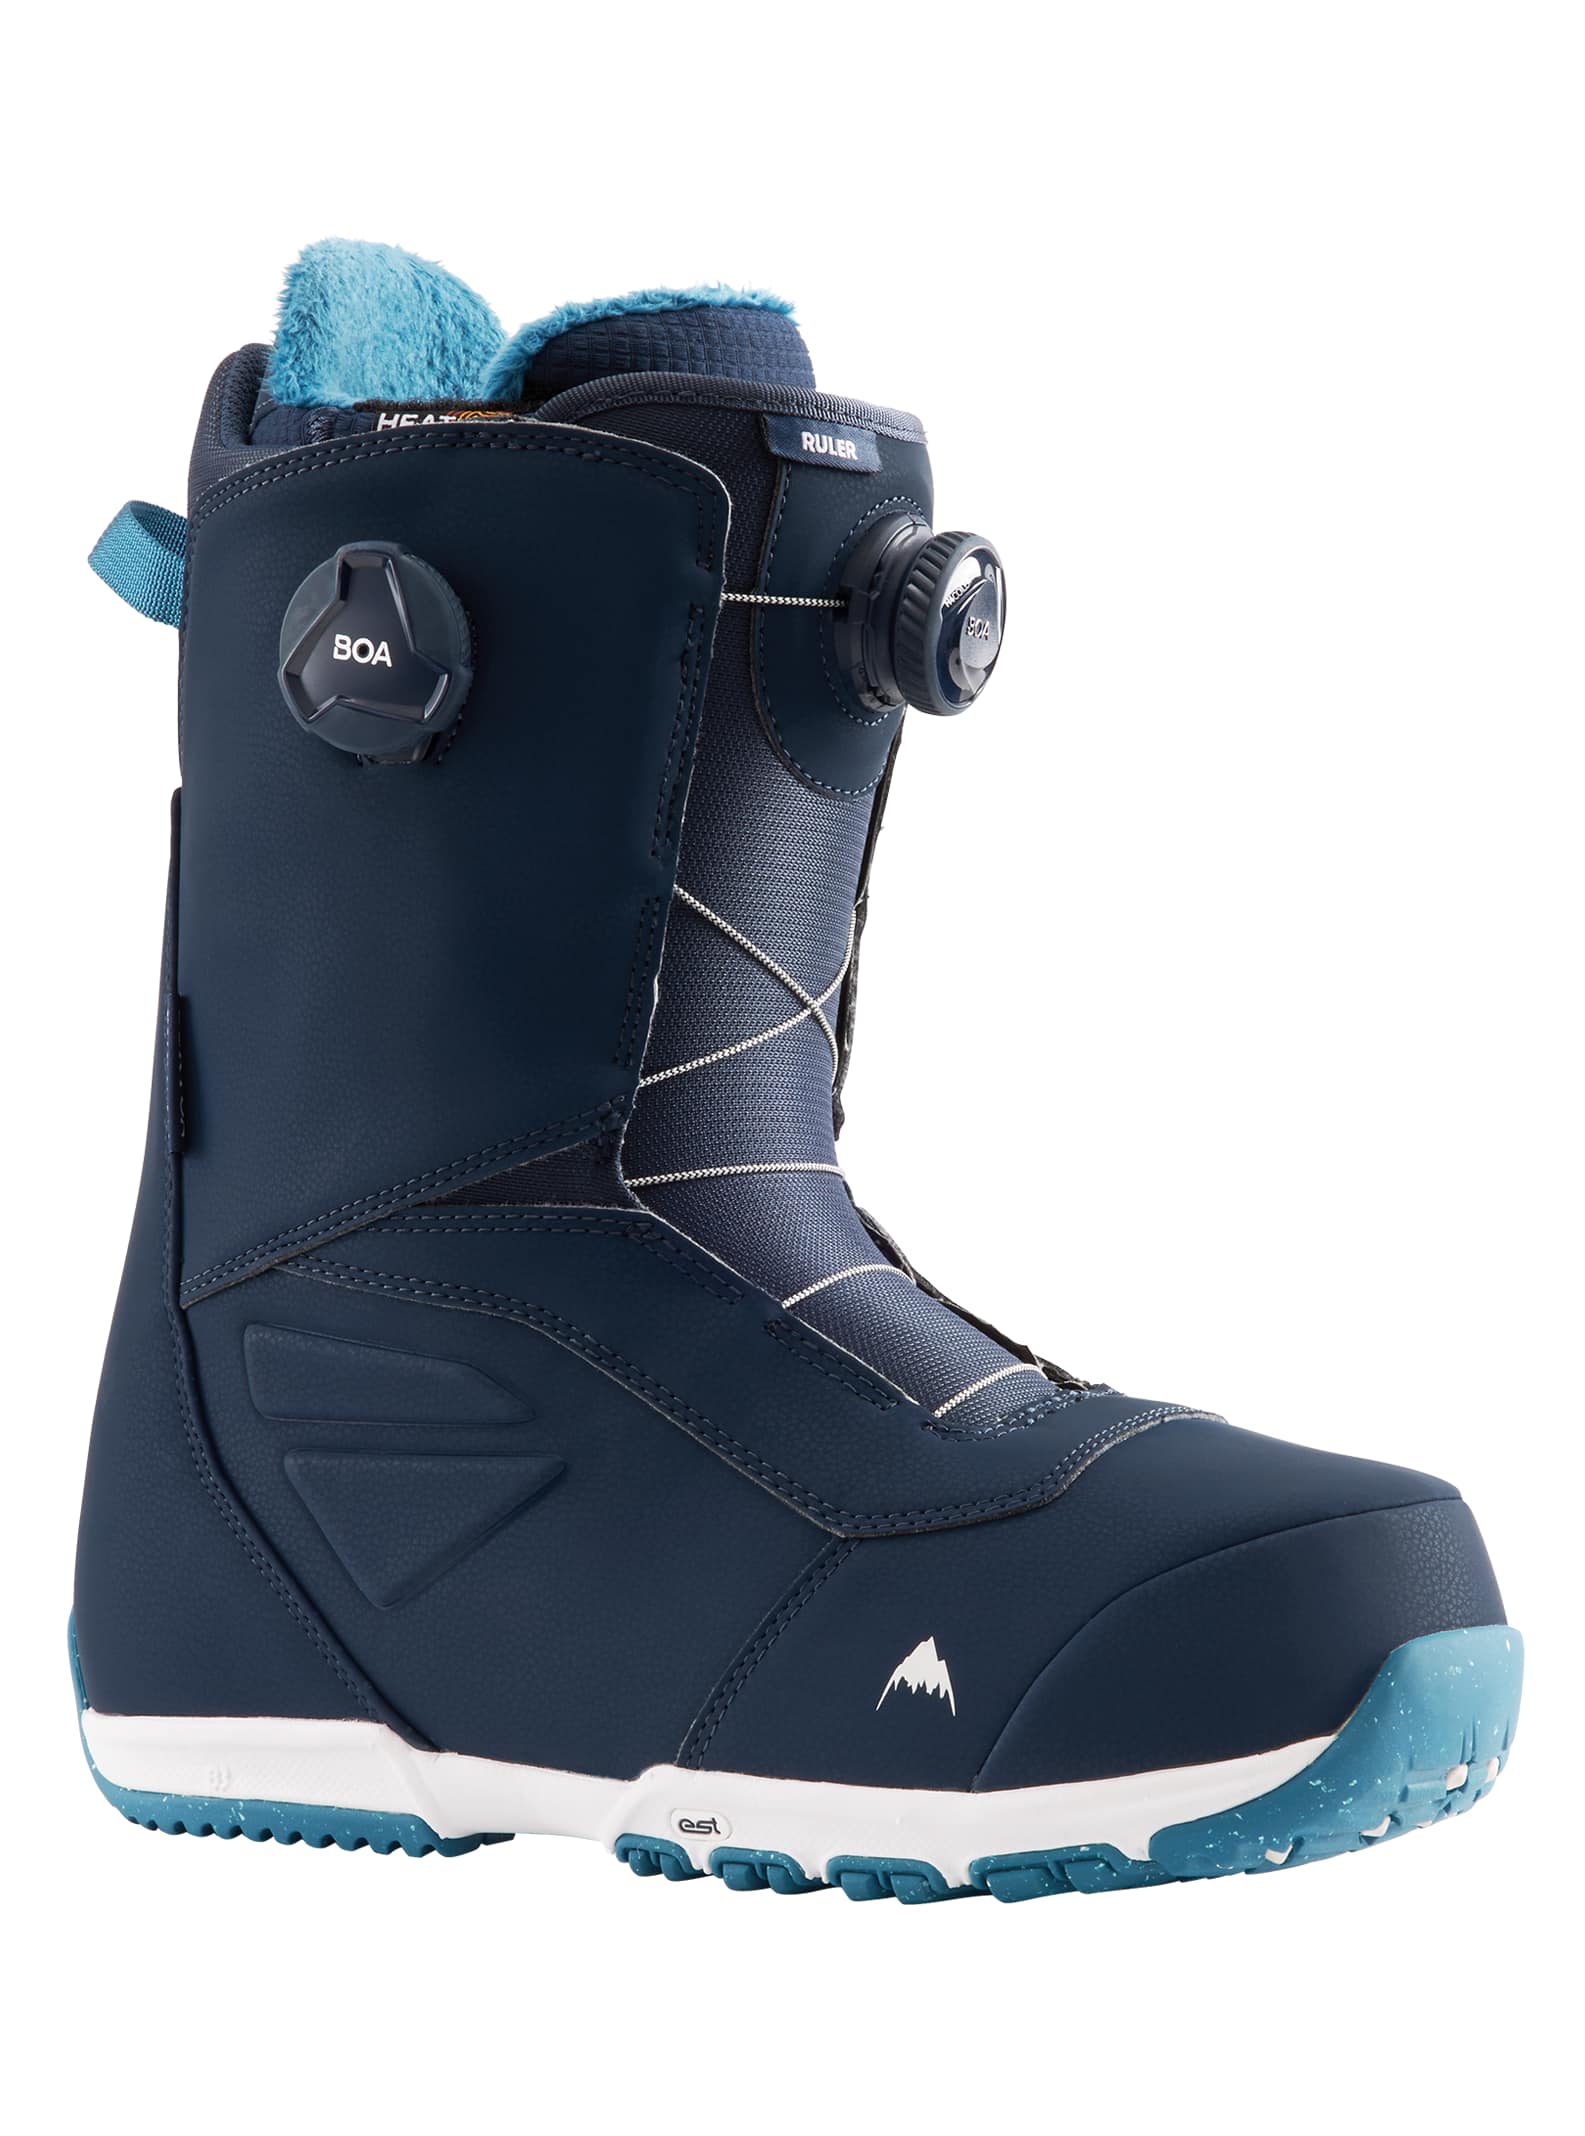 Men's Burton Ruler BOA® Snowboard Boots - Wide | Burton.com Winter 2022 US